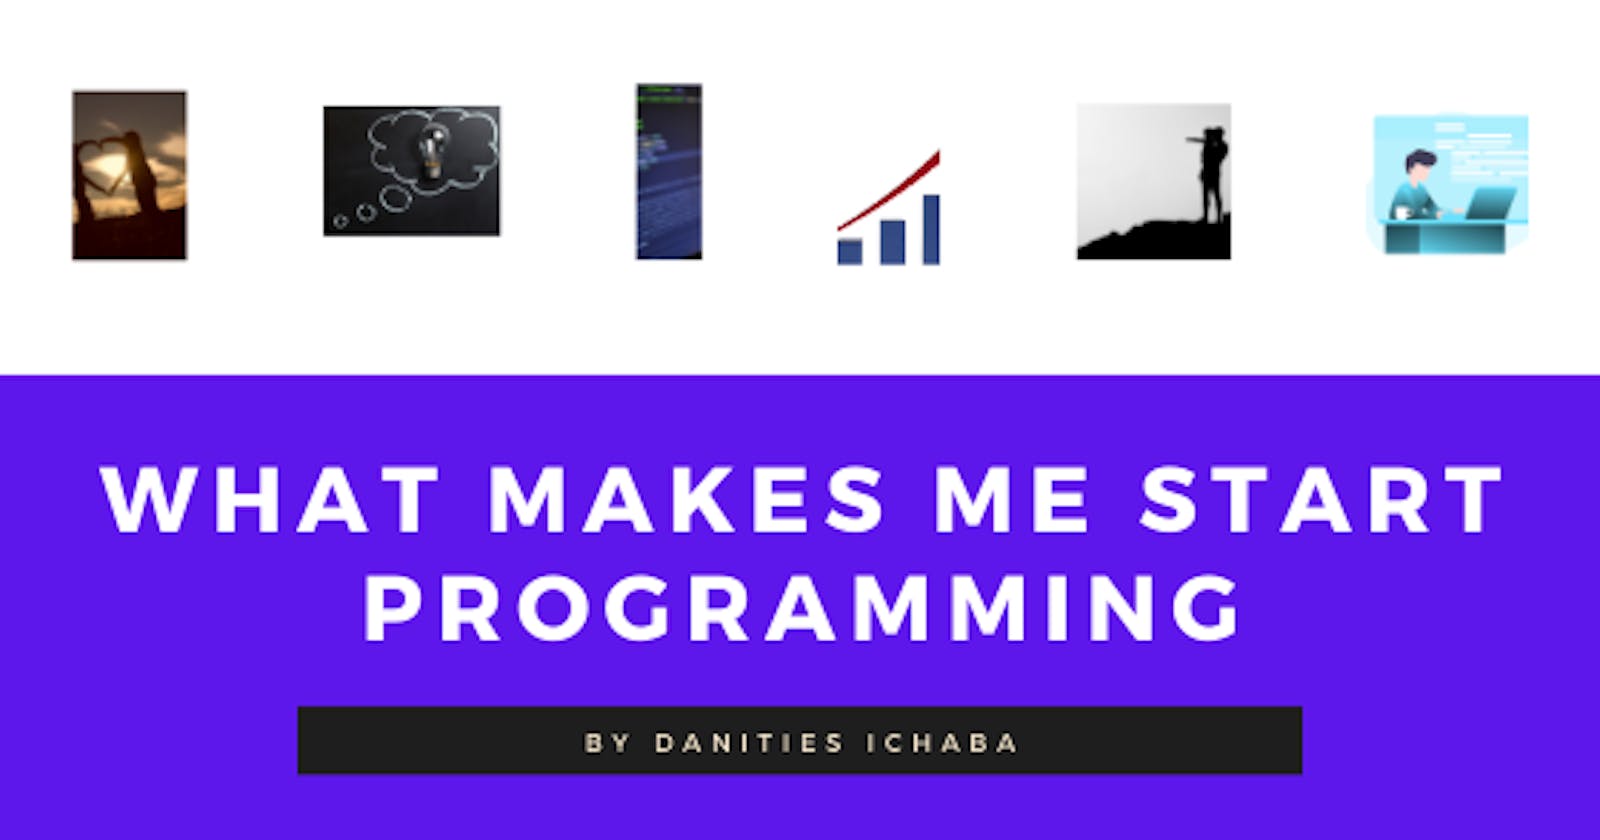 What makes me start #Programming